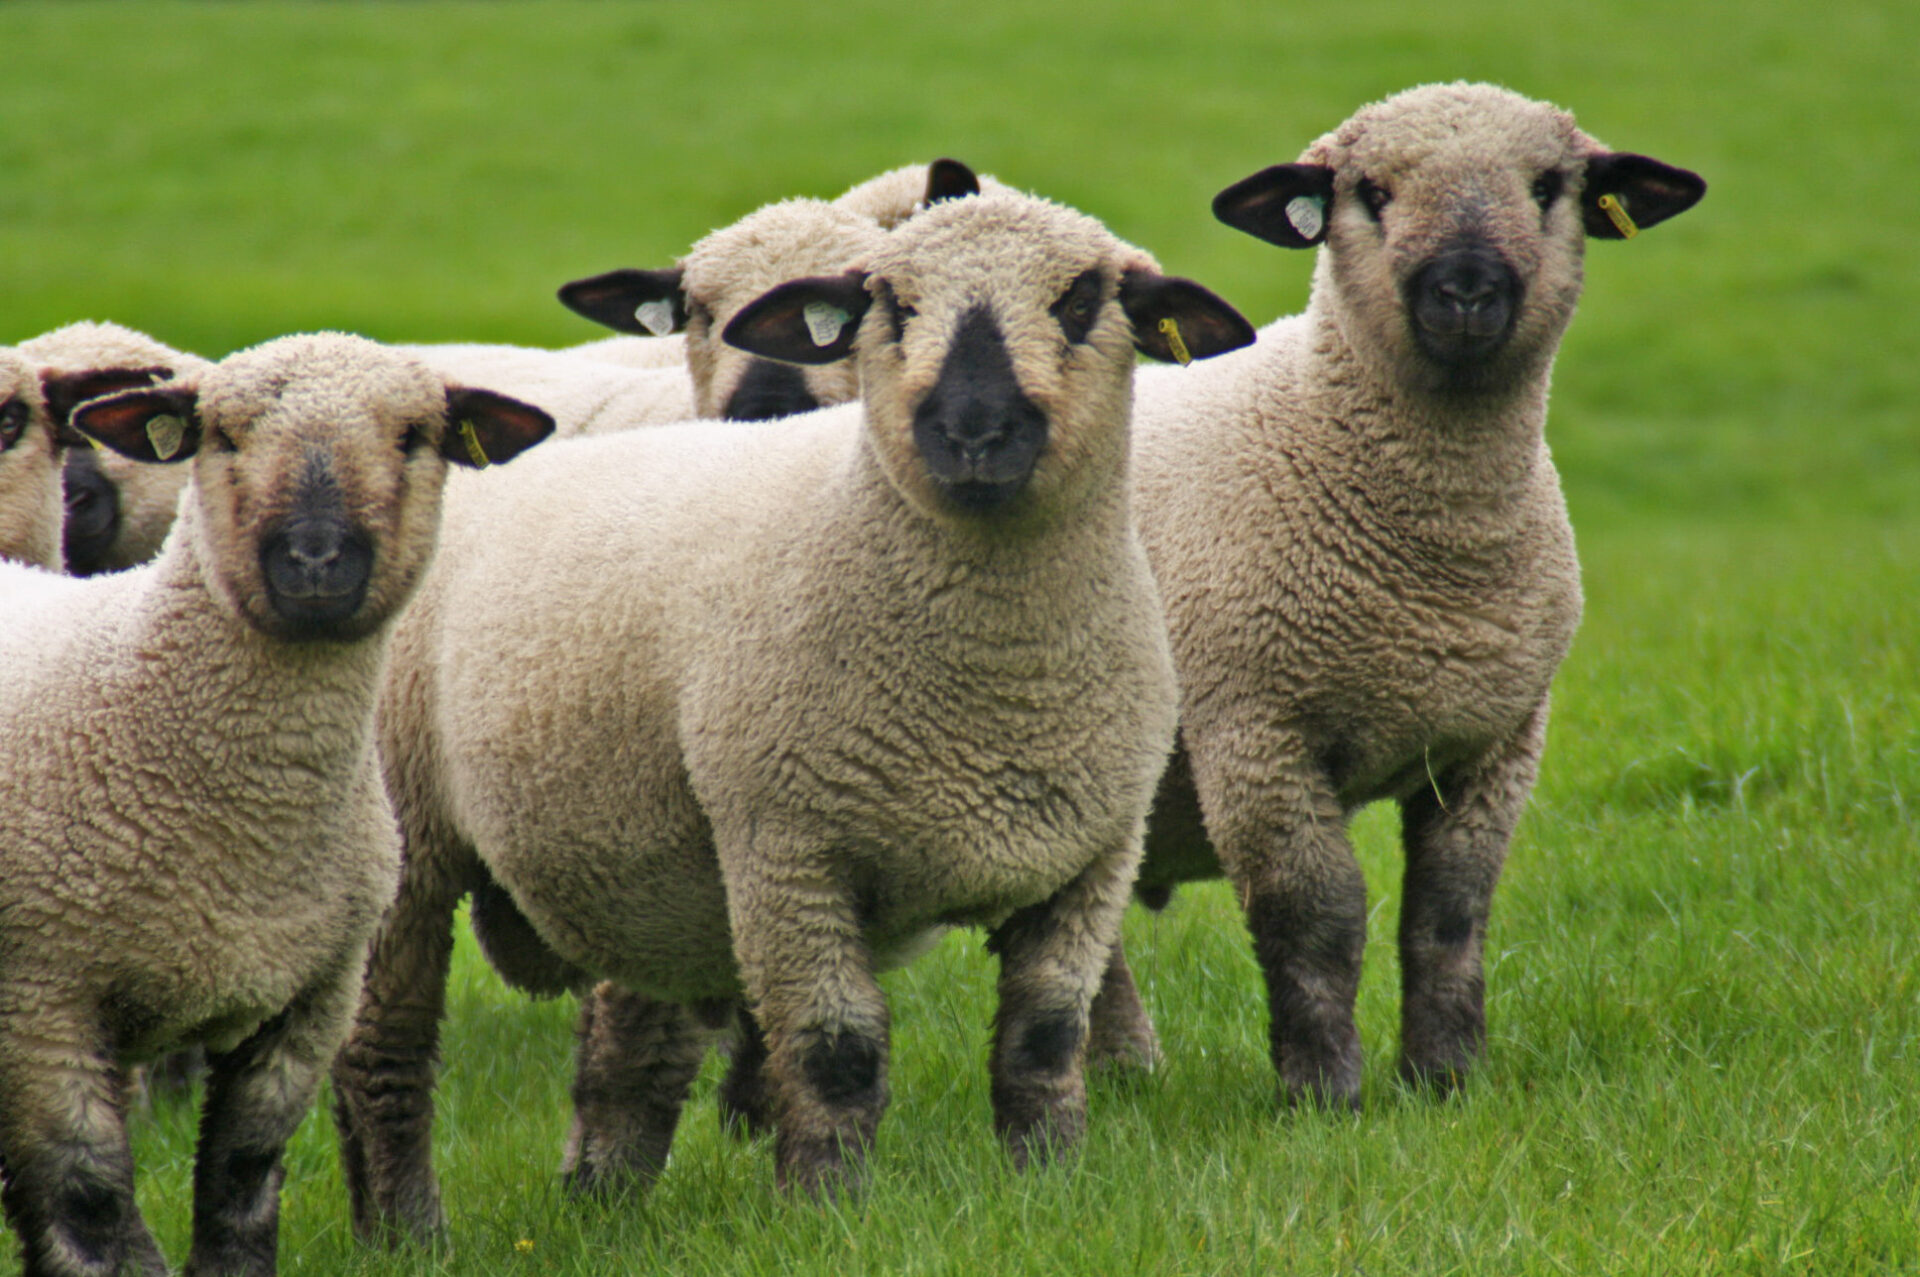 locally reared high welfare lambs